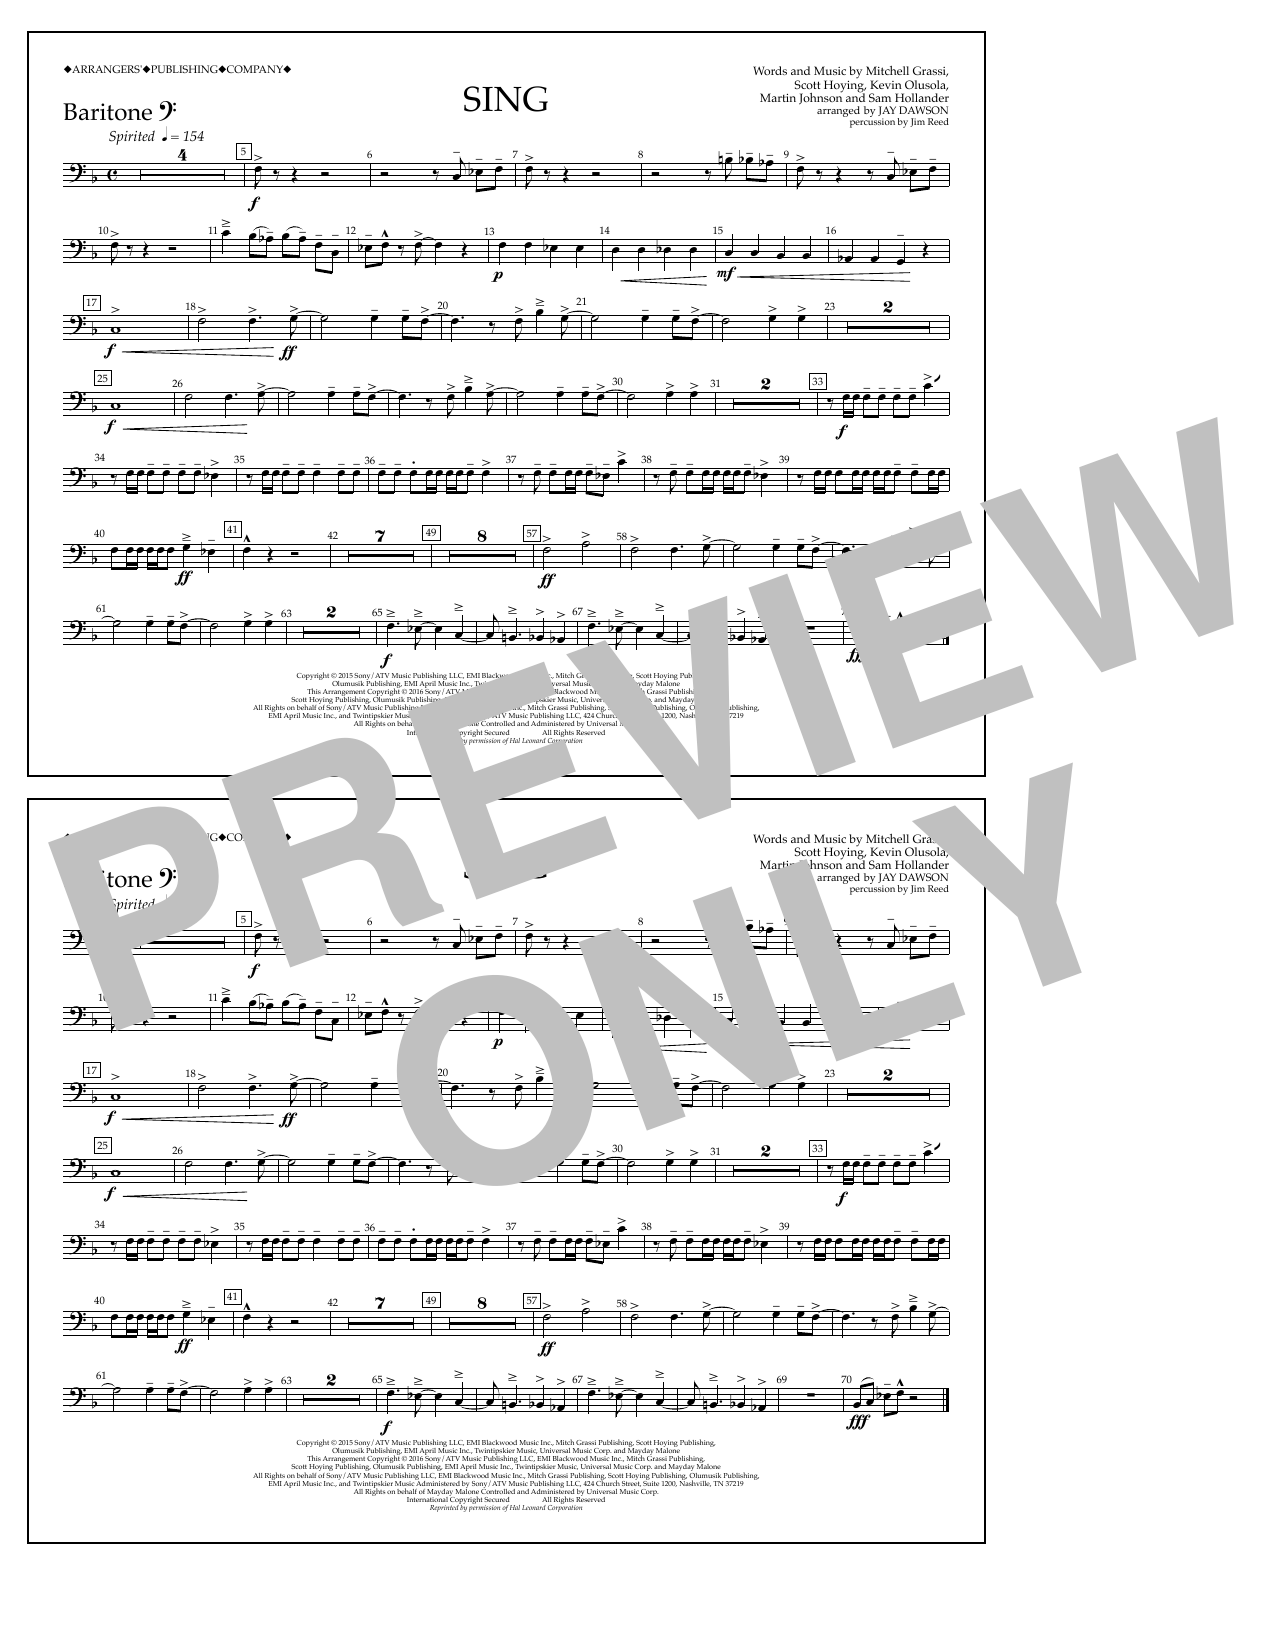 Jay Dawson Sing - Baritone B.C. Sheet Music Notes & Chords for Marching Band - Download or Print PDF